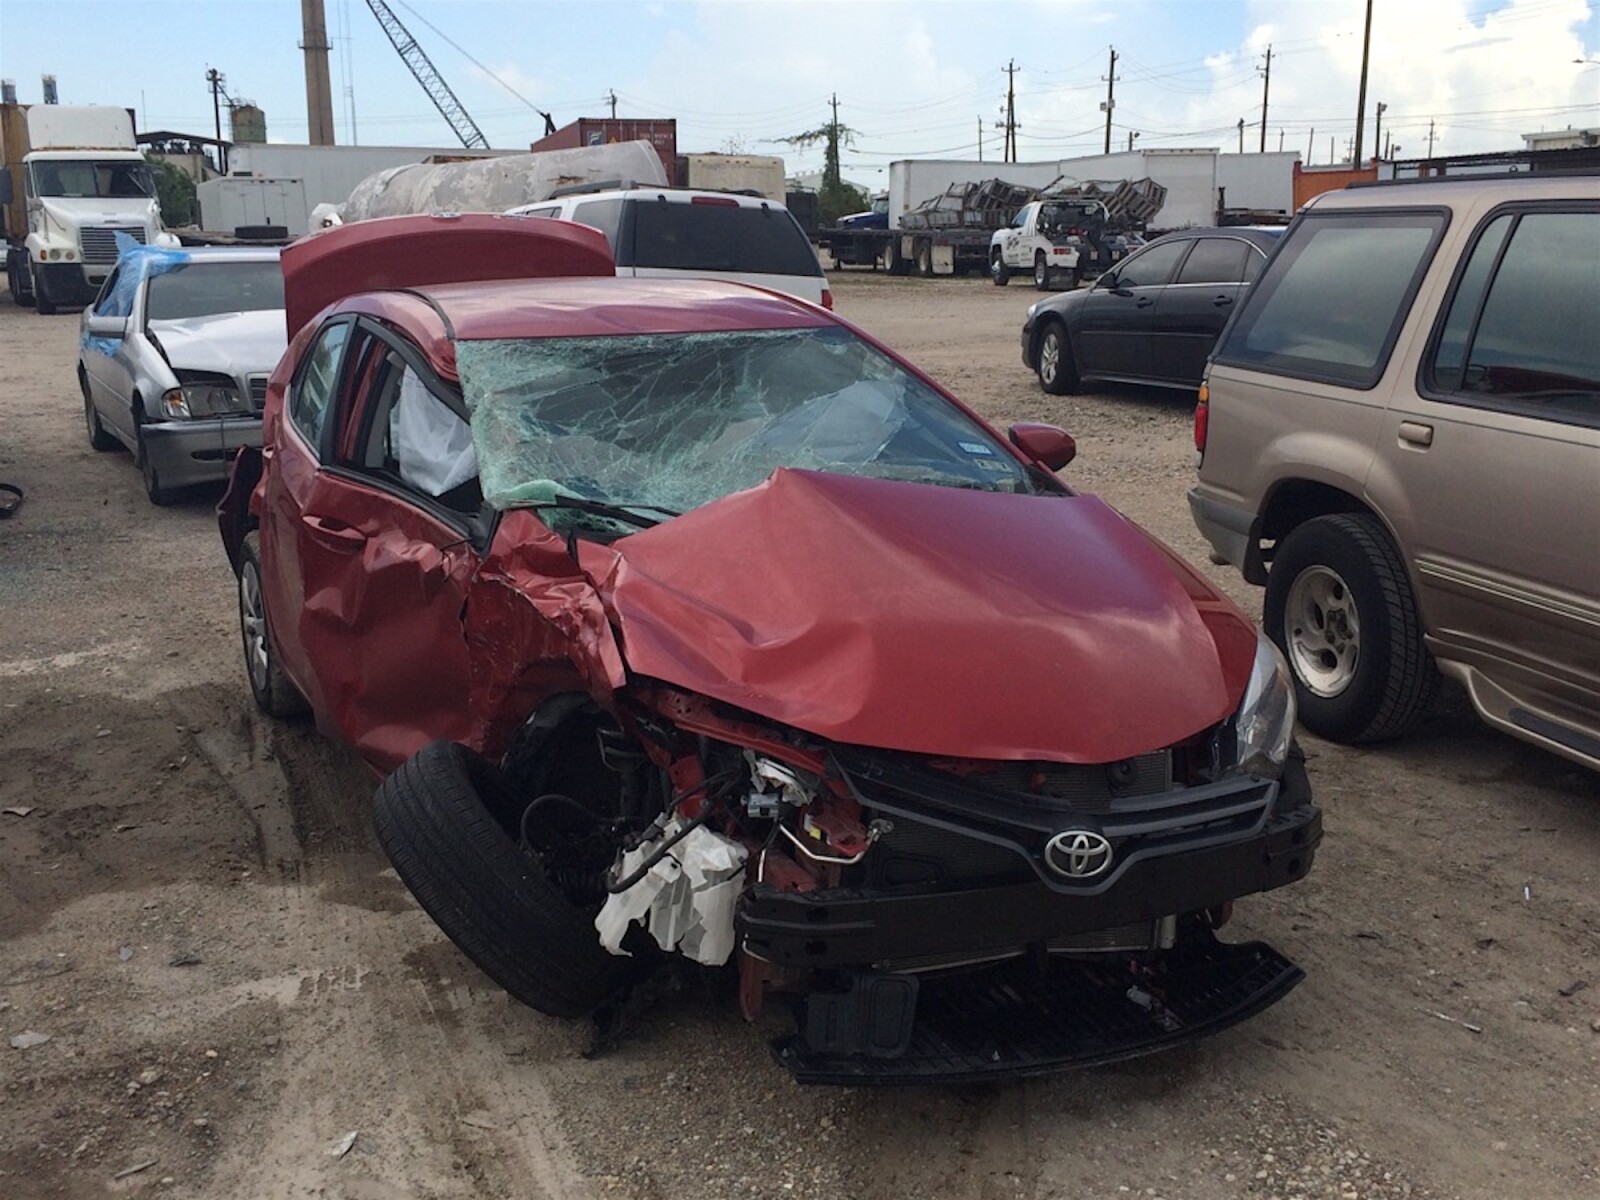 Colorado Car Accident Attorney Maximizes Compensation